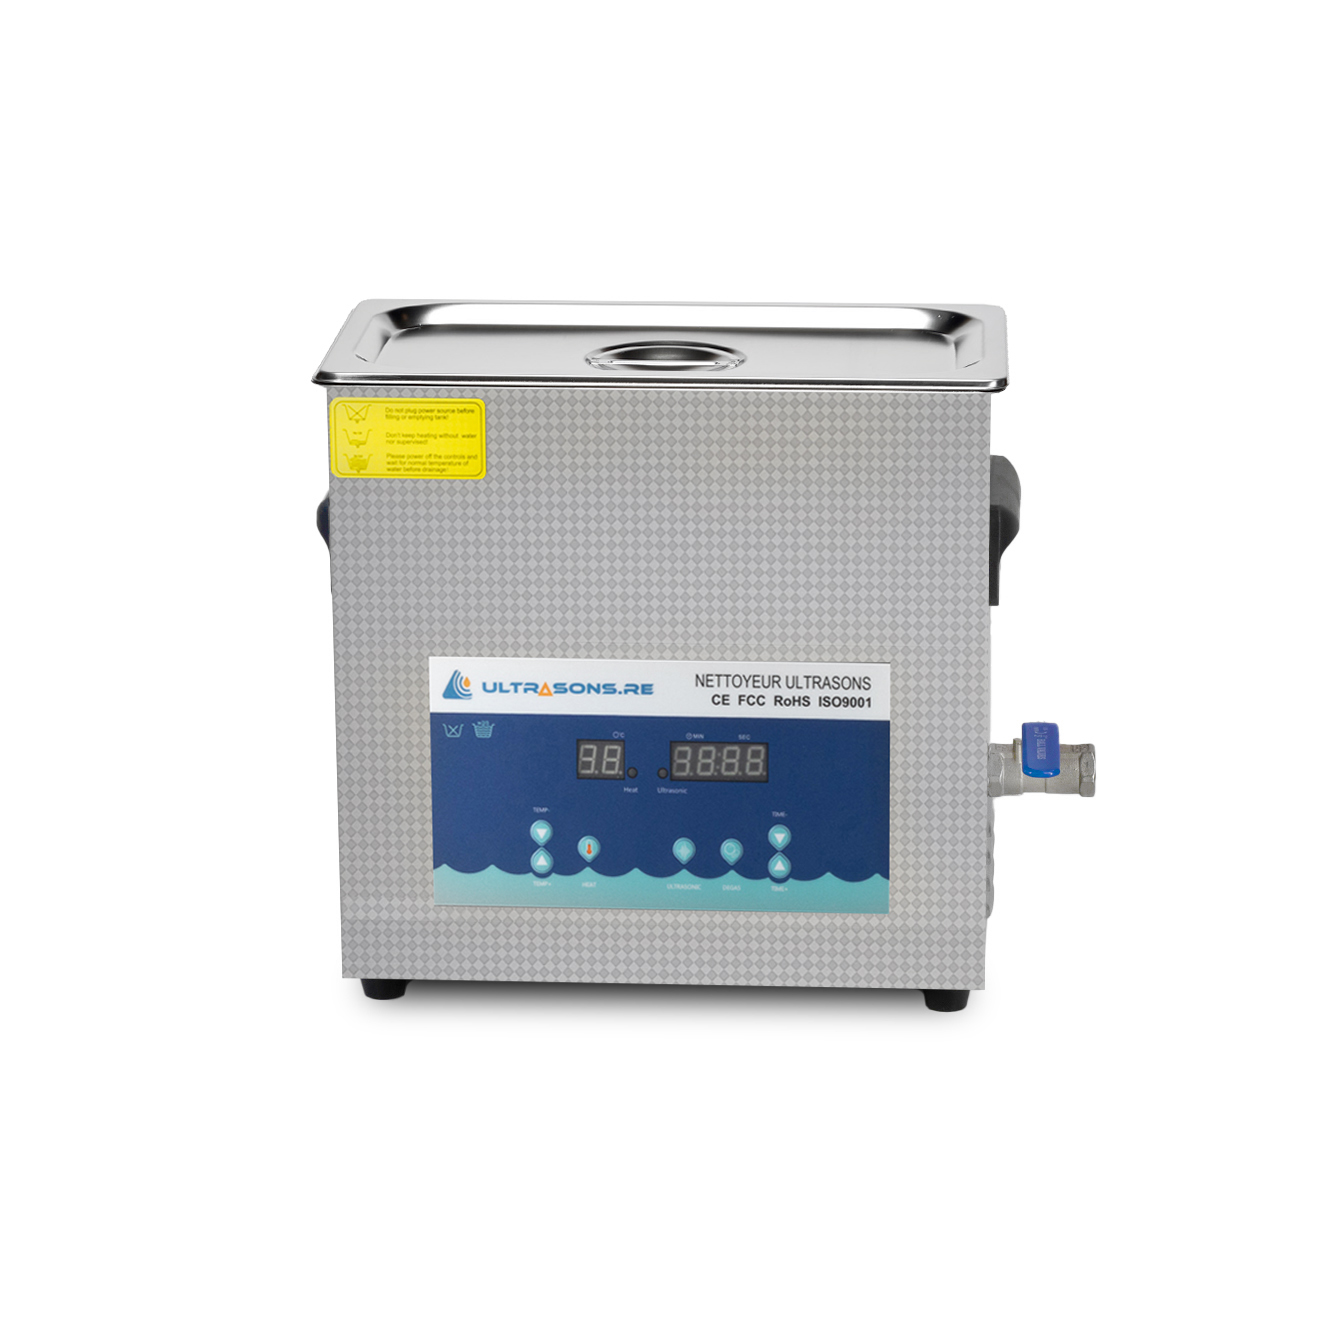 Nettoyeur ultrasons 600 ML Electris UC317MD à 45,00€